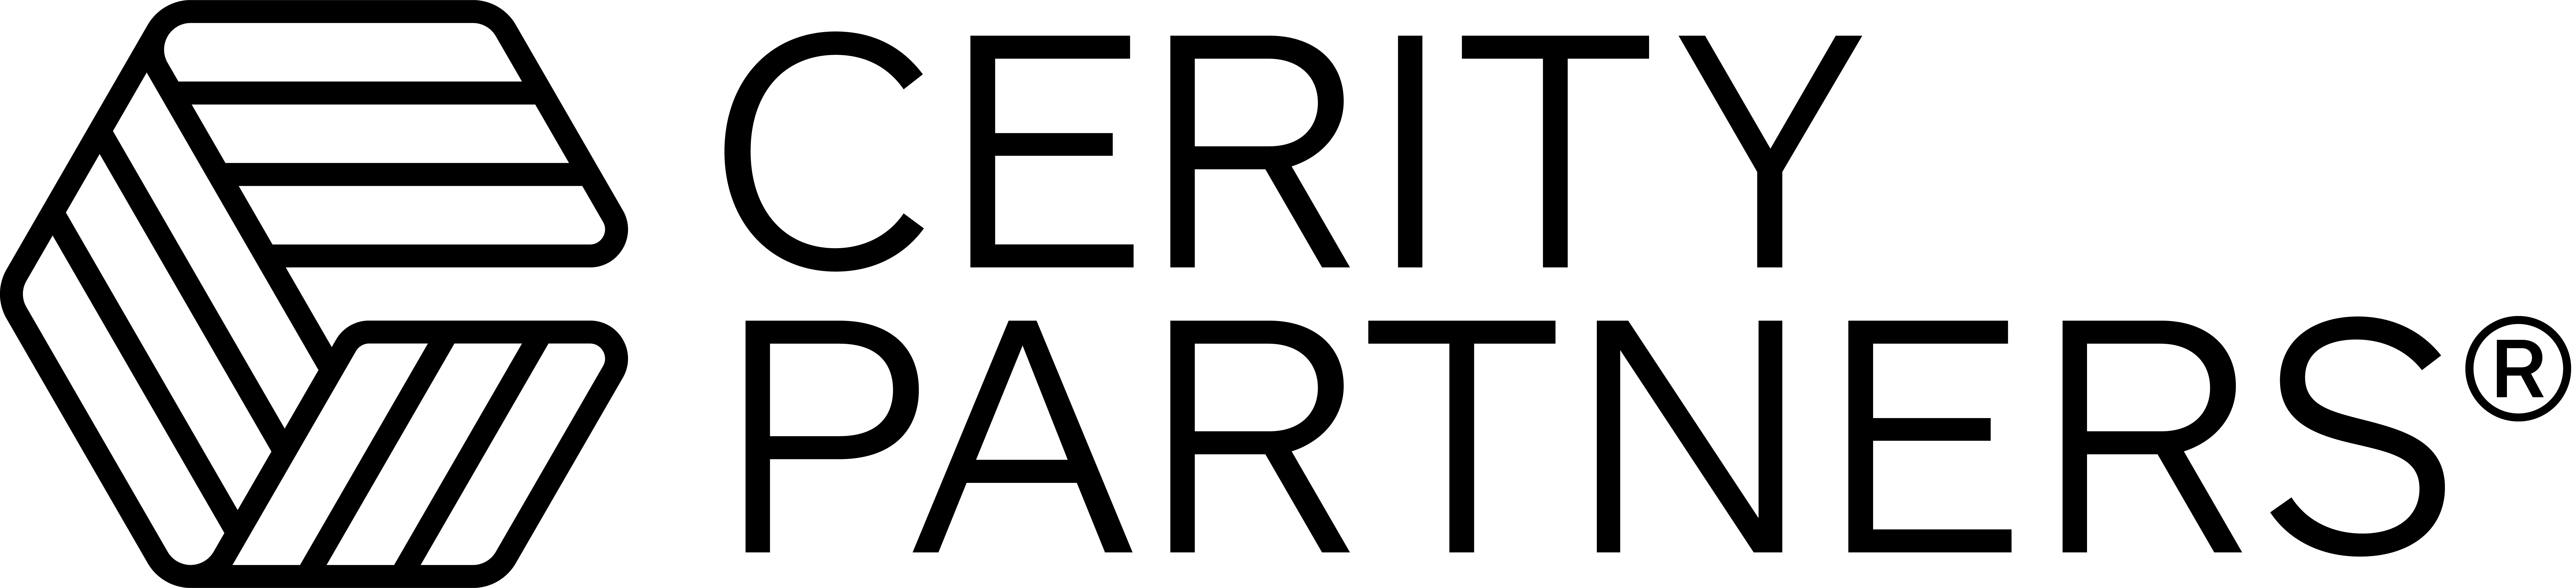 cp logo black 110519